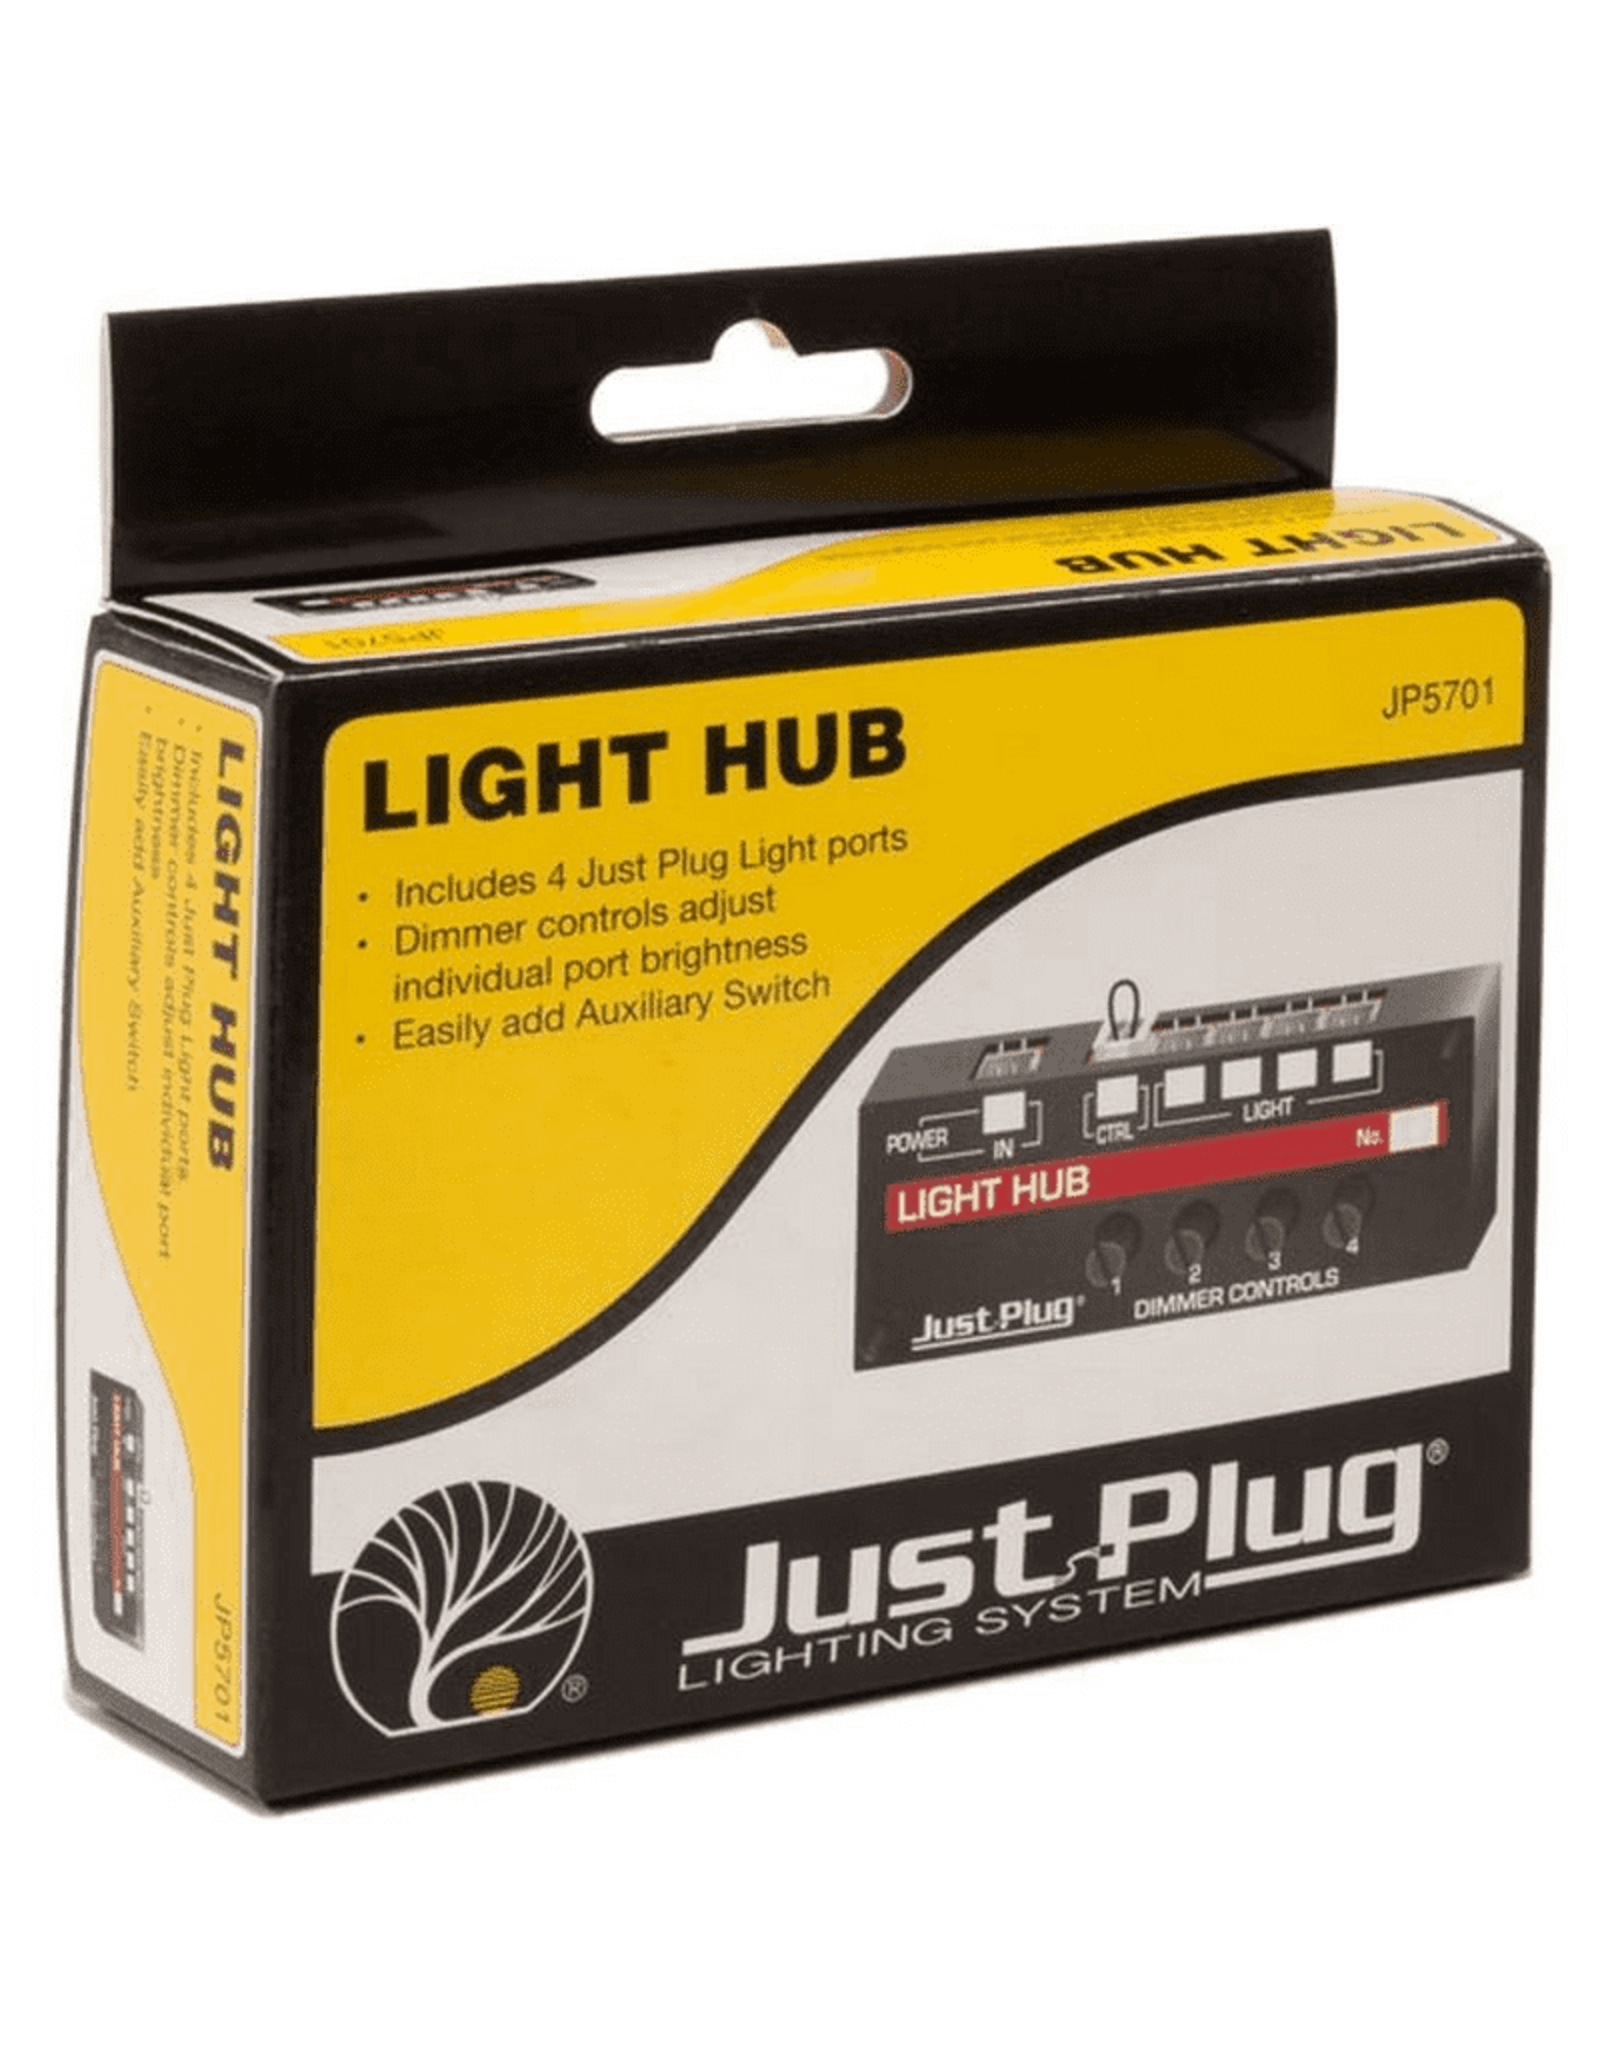 Woodland Scenics Light Hub Only - Just Plug Lighting System